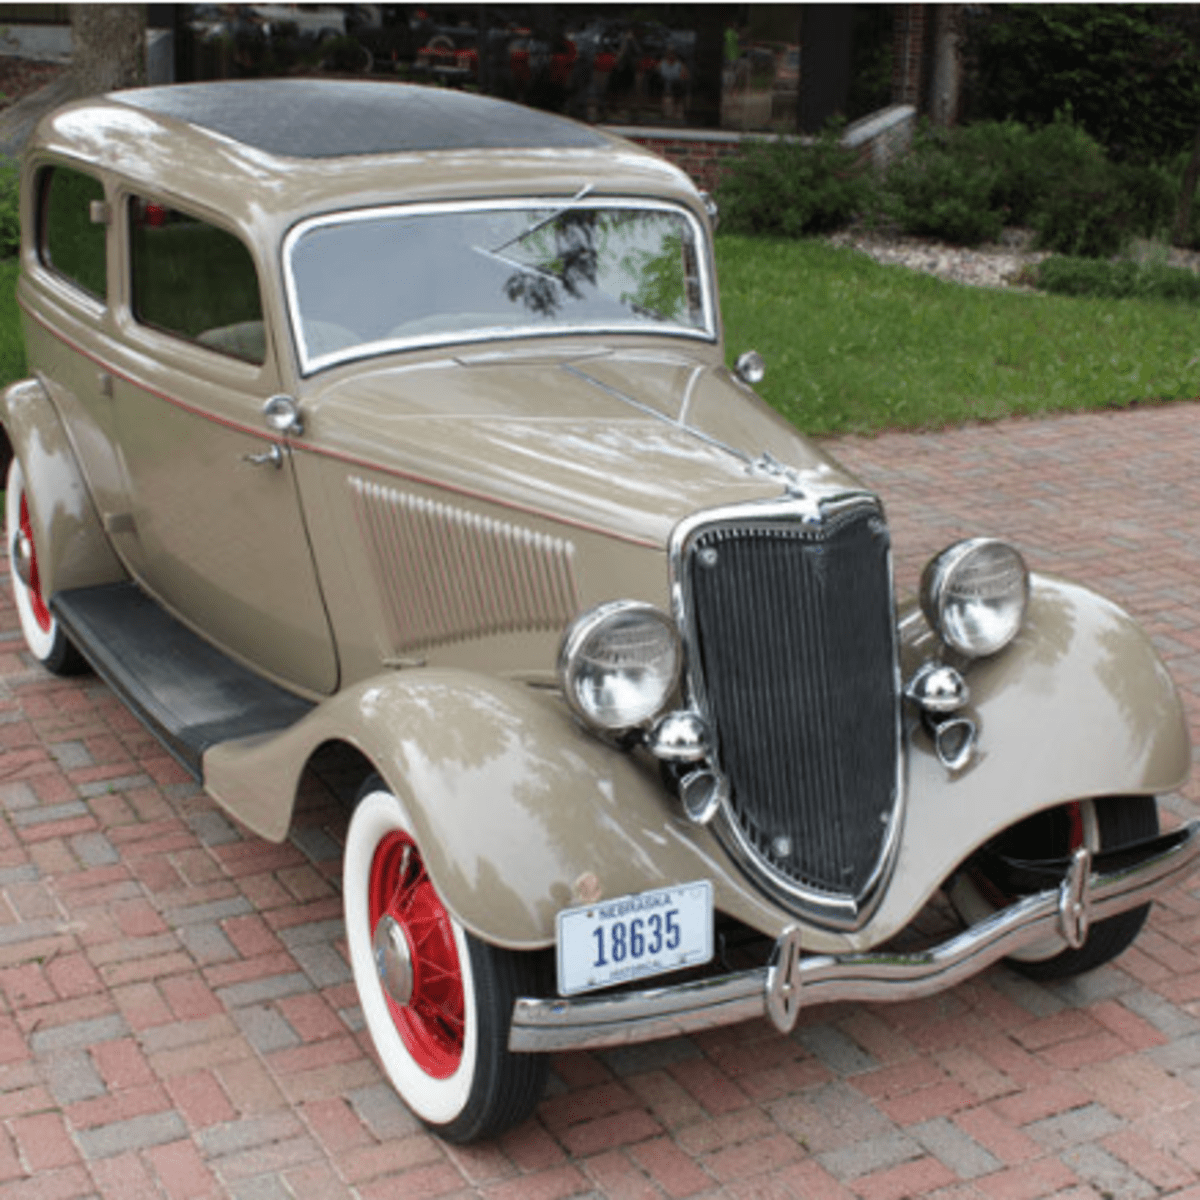 Car of the Week: 1934 Ford Tudor sedan - Old Cars Weekly